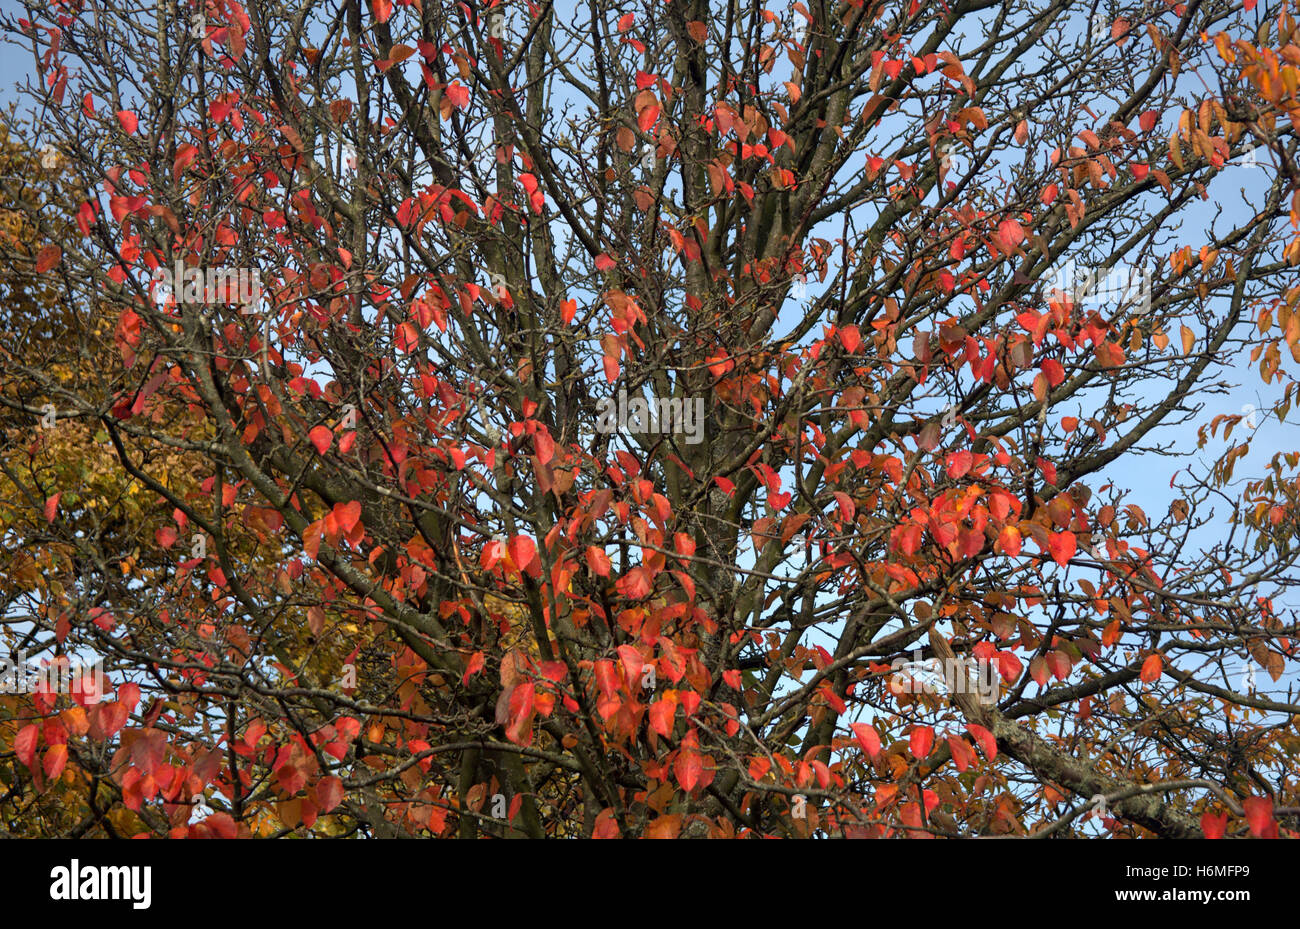 Im Herbst Laub-Bäume goldene Blätter Muster und Farbe Stockfoto